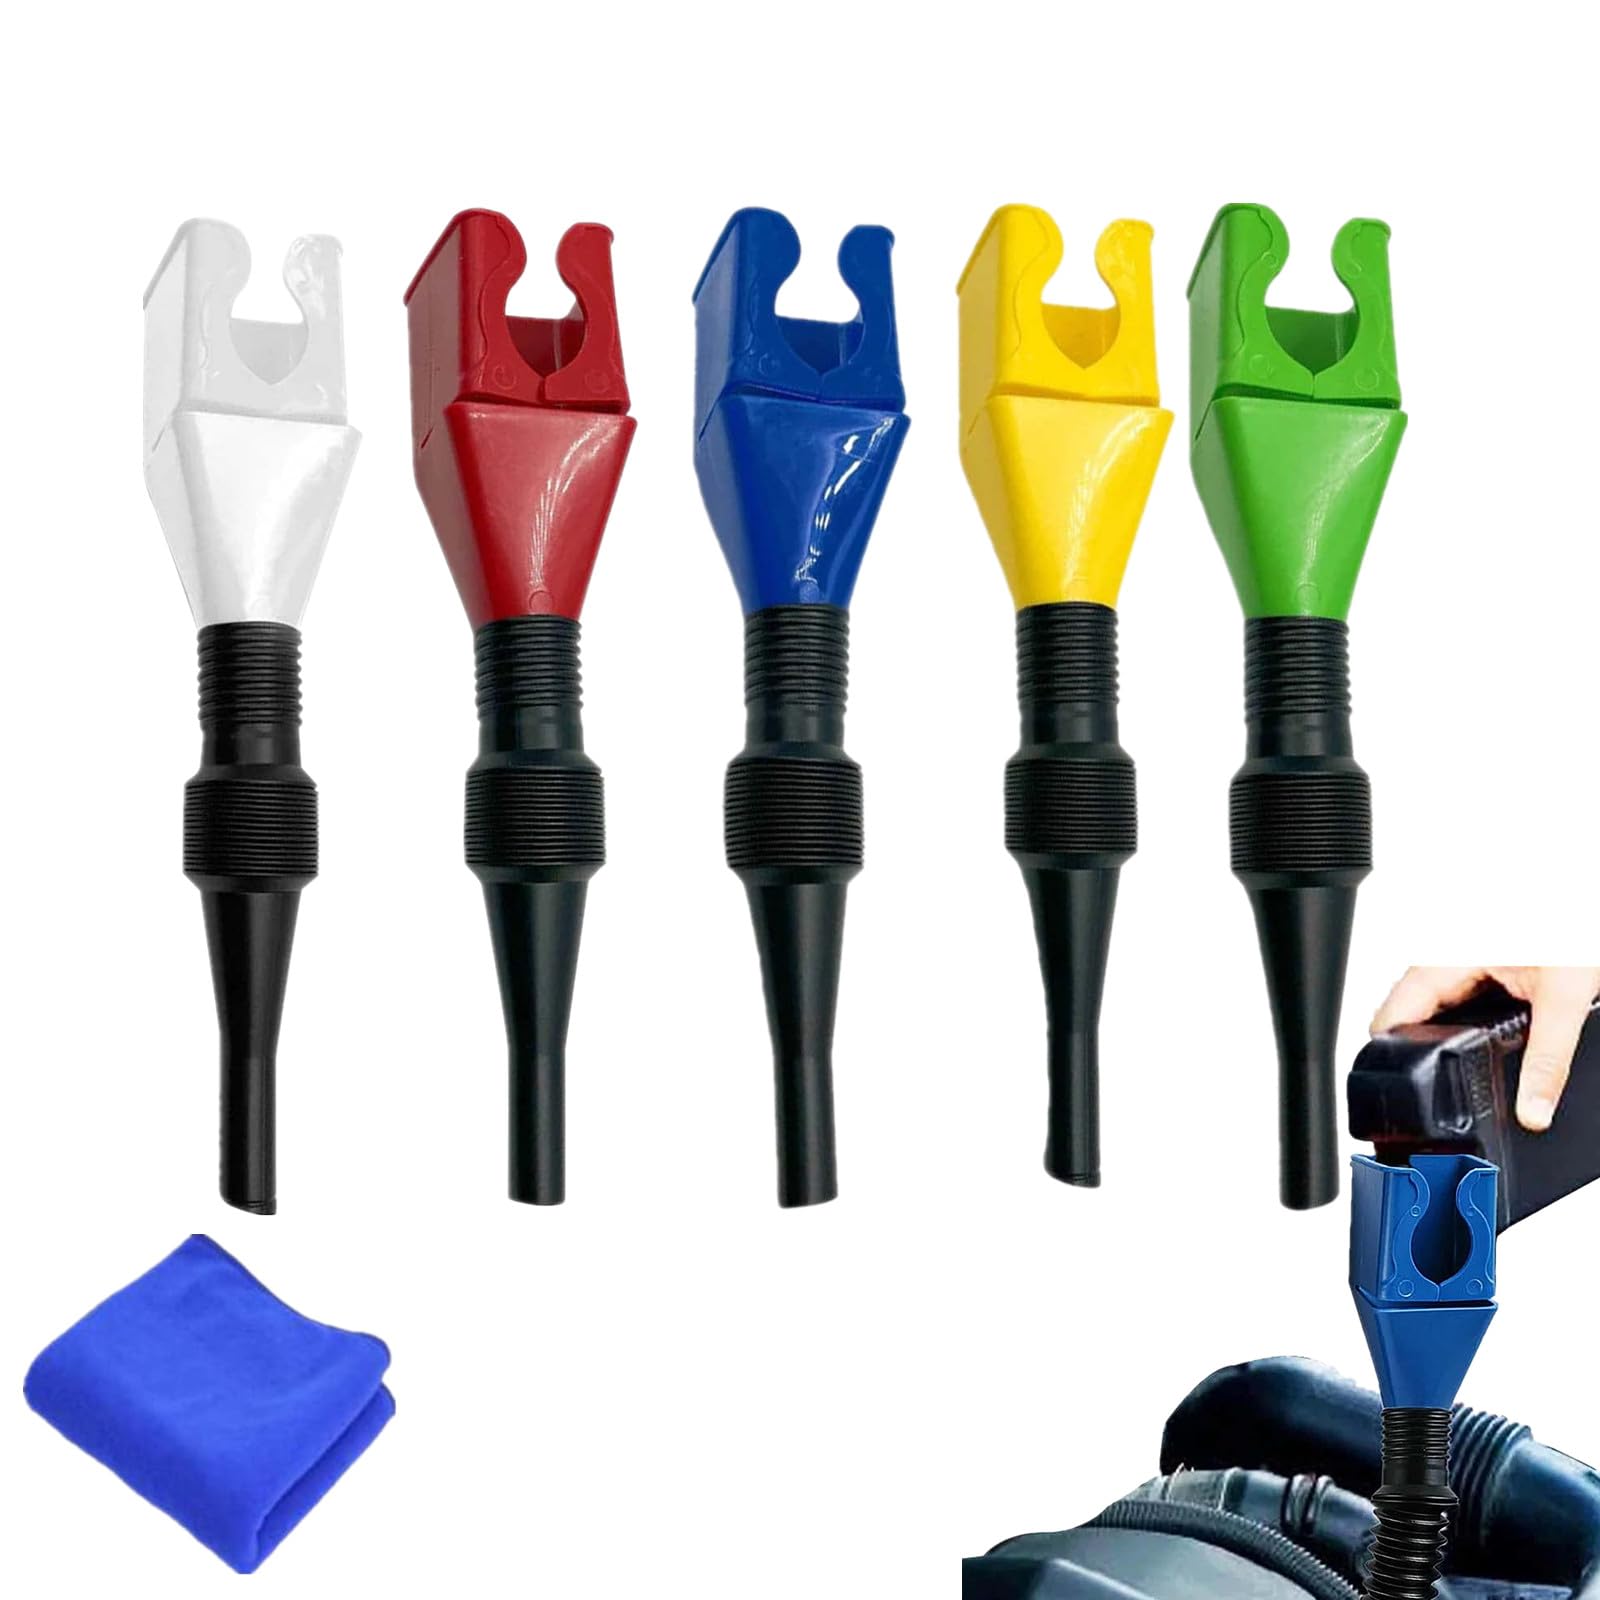 Donubiiu Flexibler Schnelltrichter für das Abtropfwerkzeug, Retractable Auto Fuel Funnel, Oil Funnel for Oil Change, Flexible Draining Tool Snap Funnel for Cars Motorcycles (5Pcs) von Donubiiu